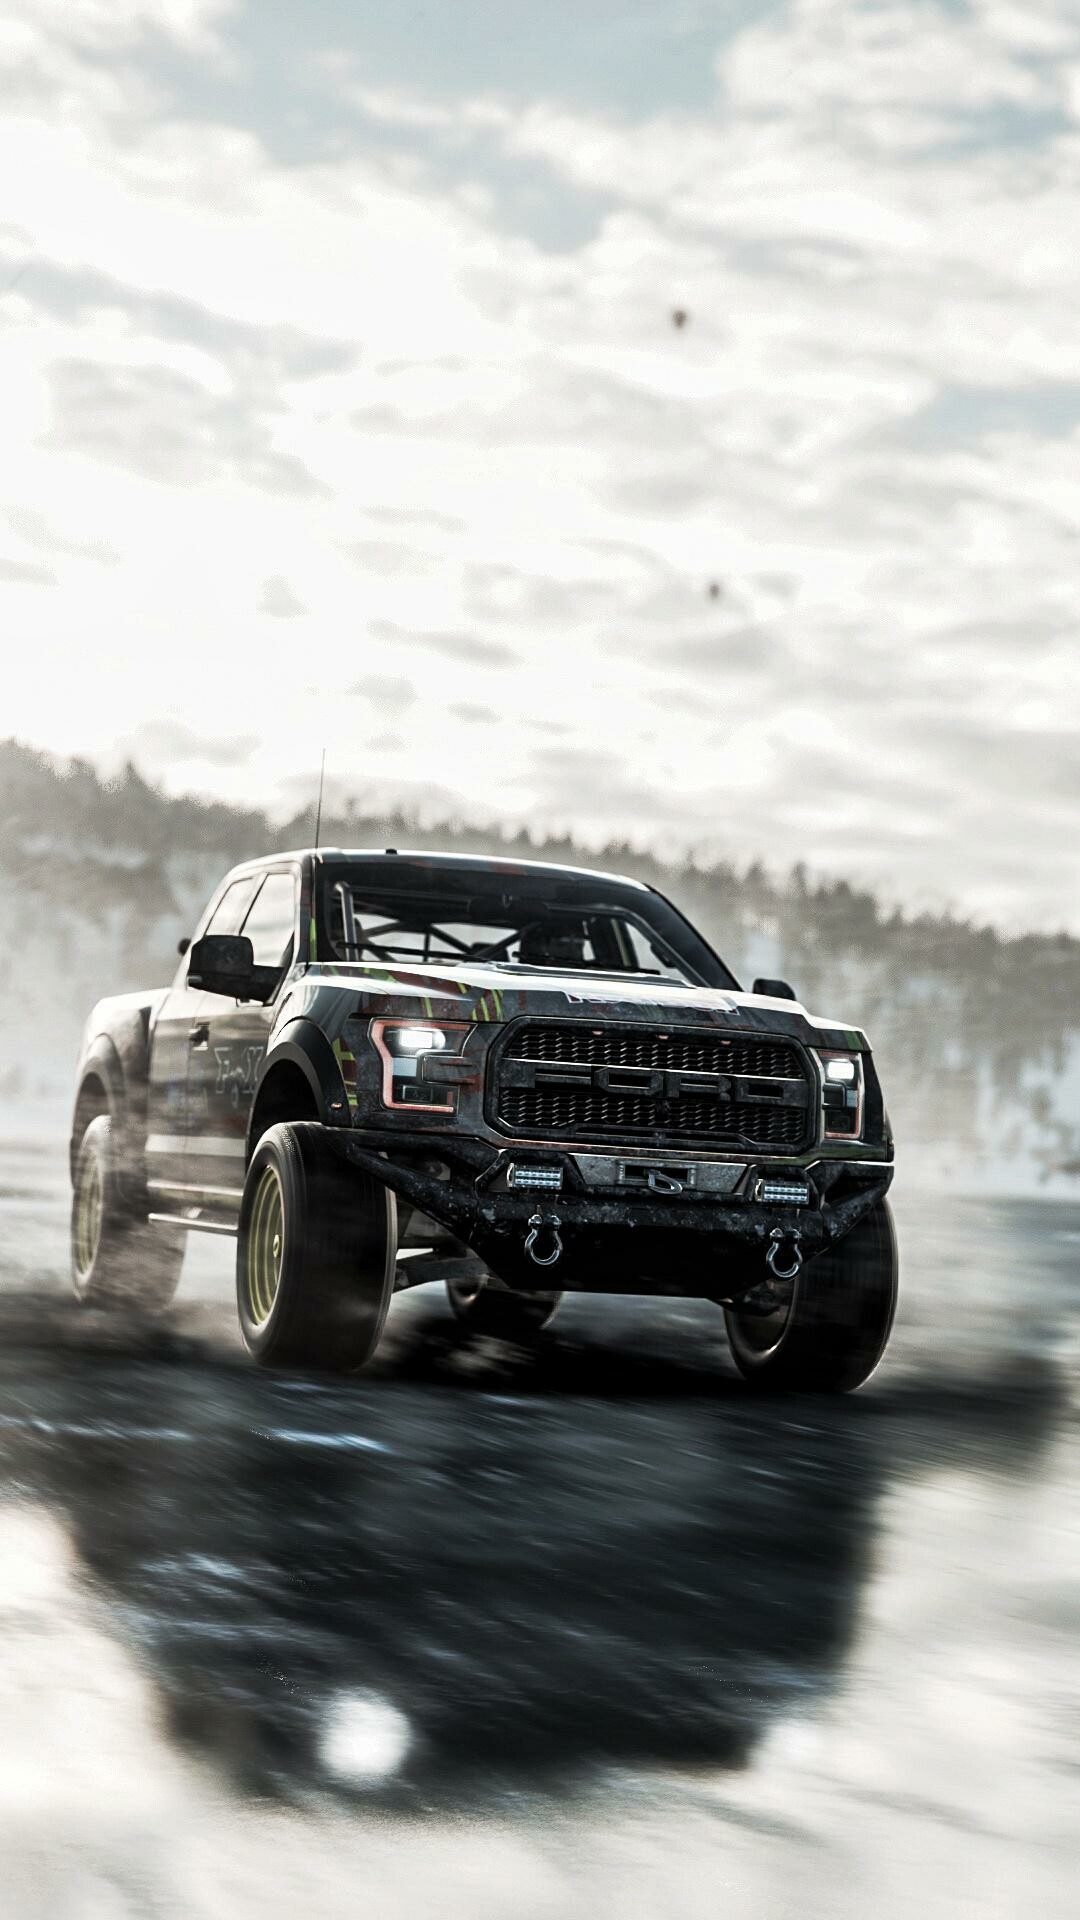 Ford: Raptor, The high-performance version of the F-150, Pickup trucks, SUVs. 1080x1920 Full HD Wallpaper.